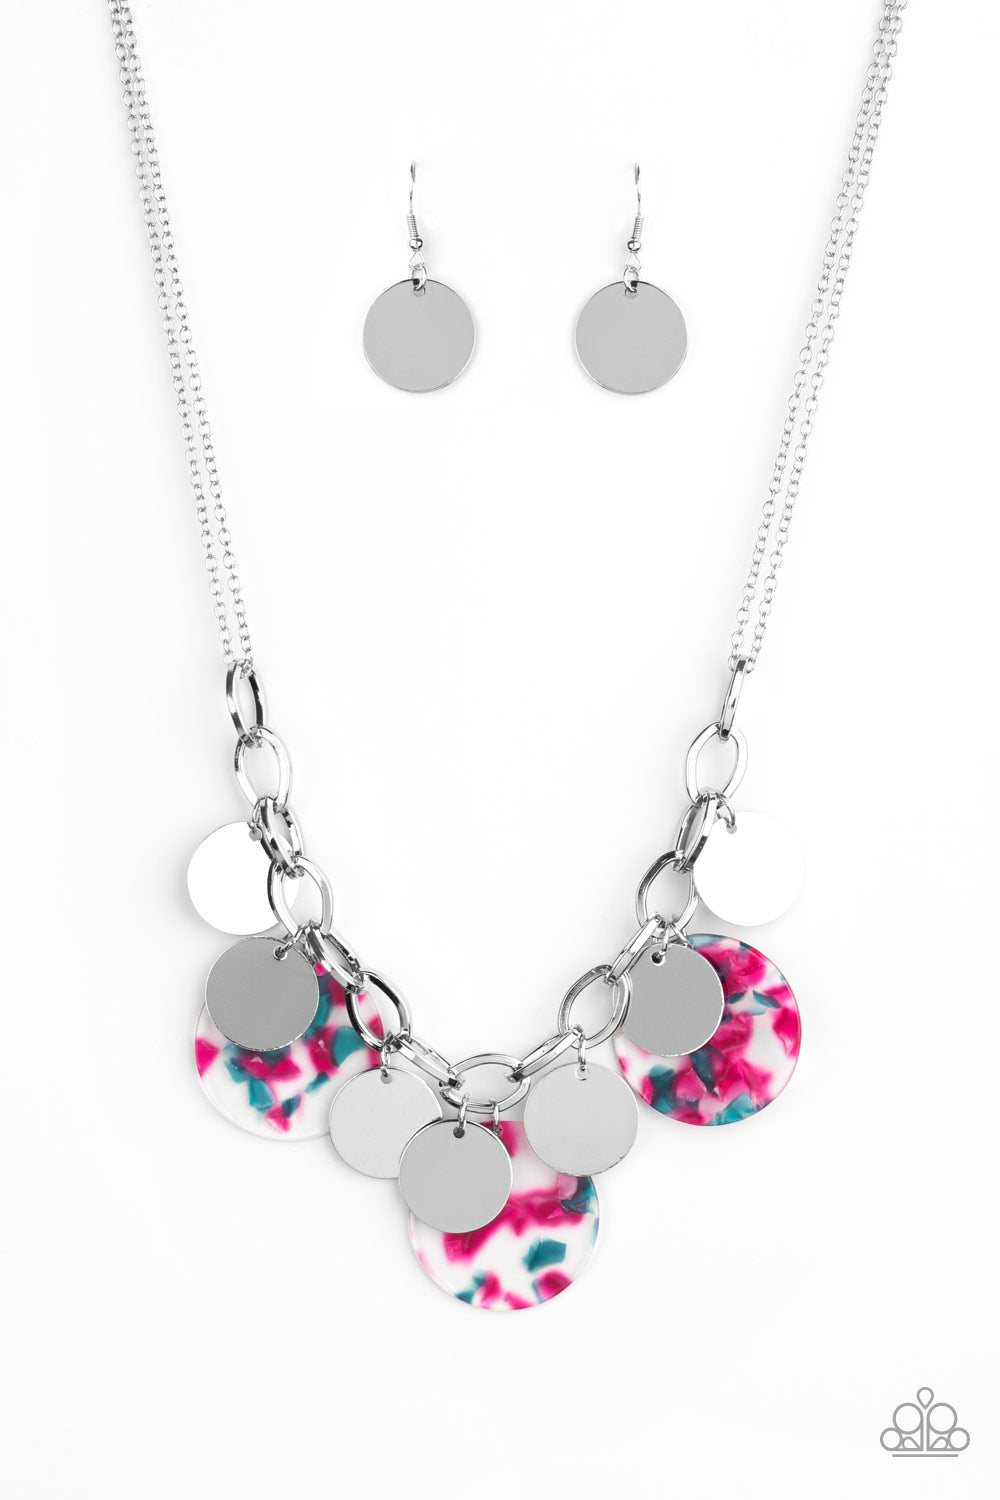 Confetti Confection - Pink necklace